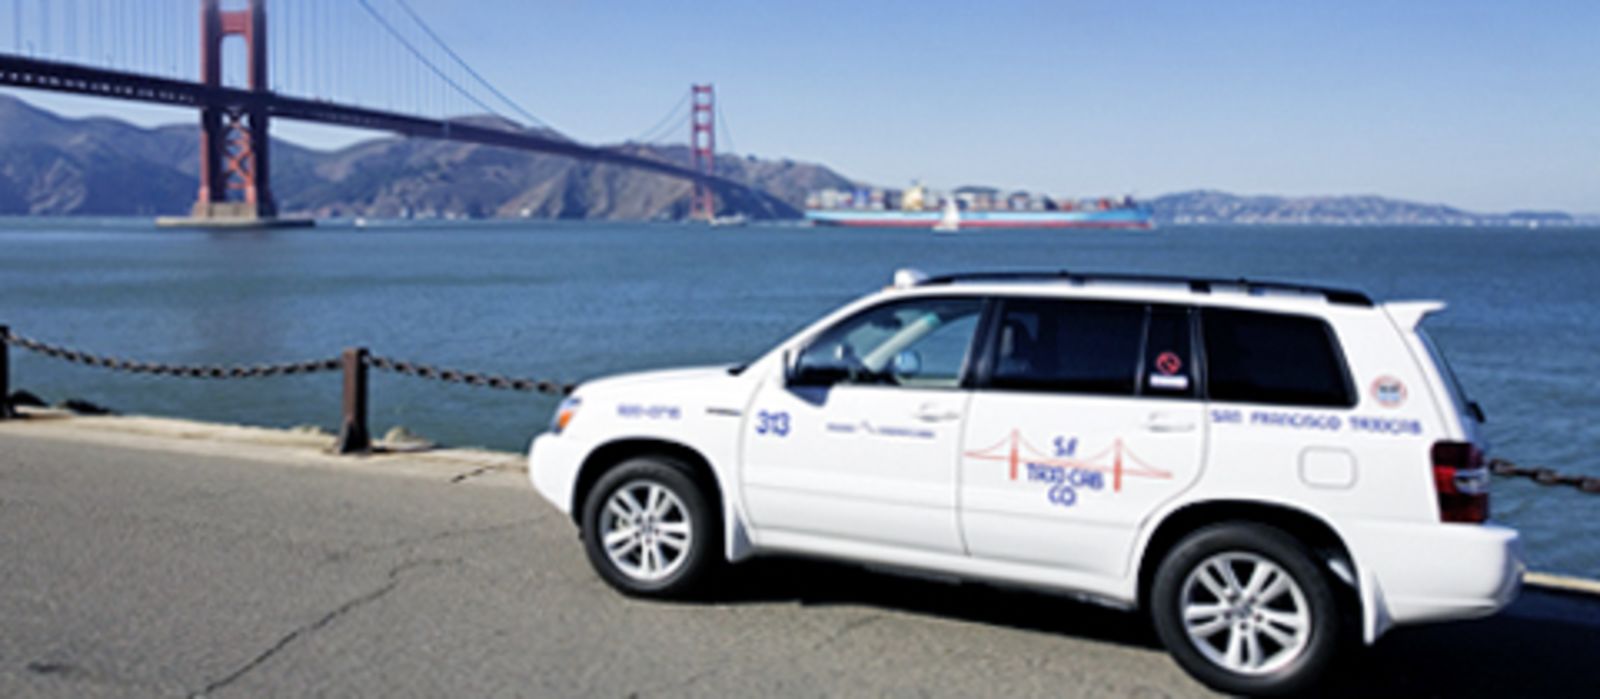 San Francisco Taxi vor der Golden Gate Bridge